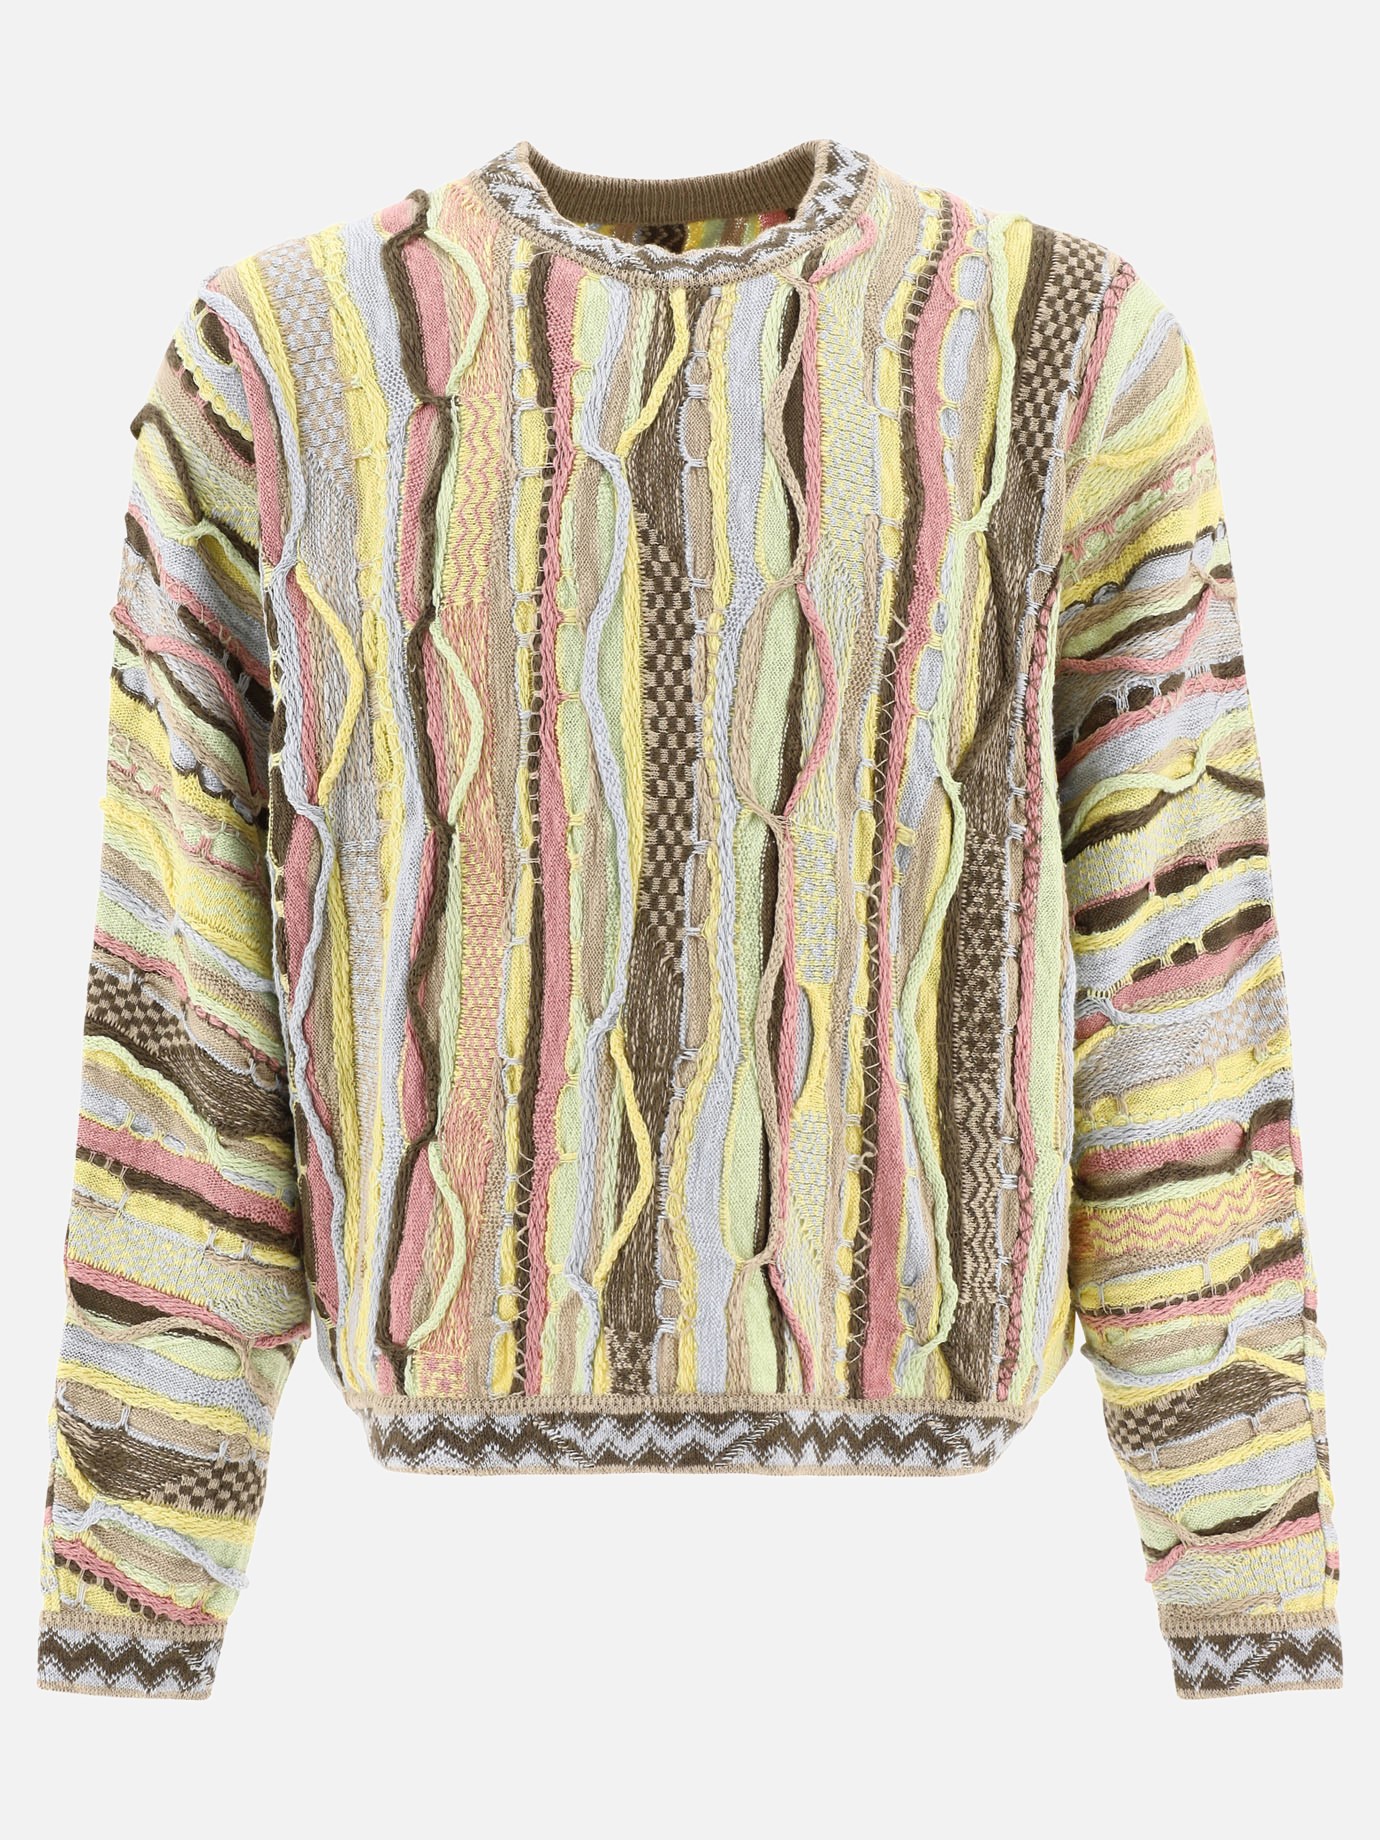  Gaudy  sweaterby Kapital - 0